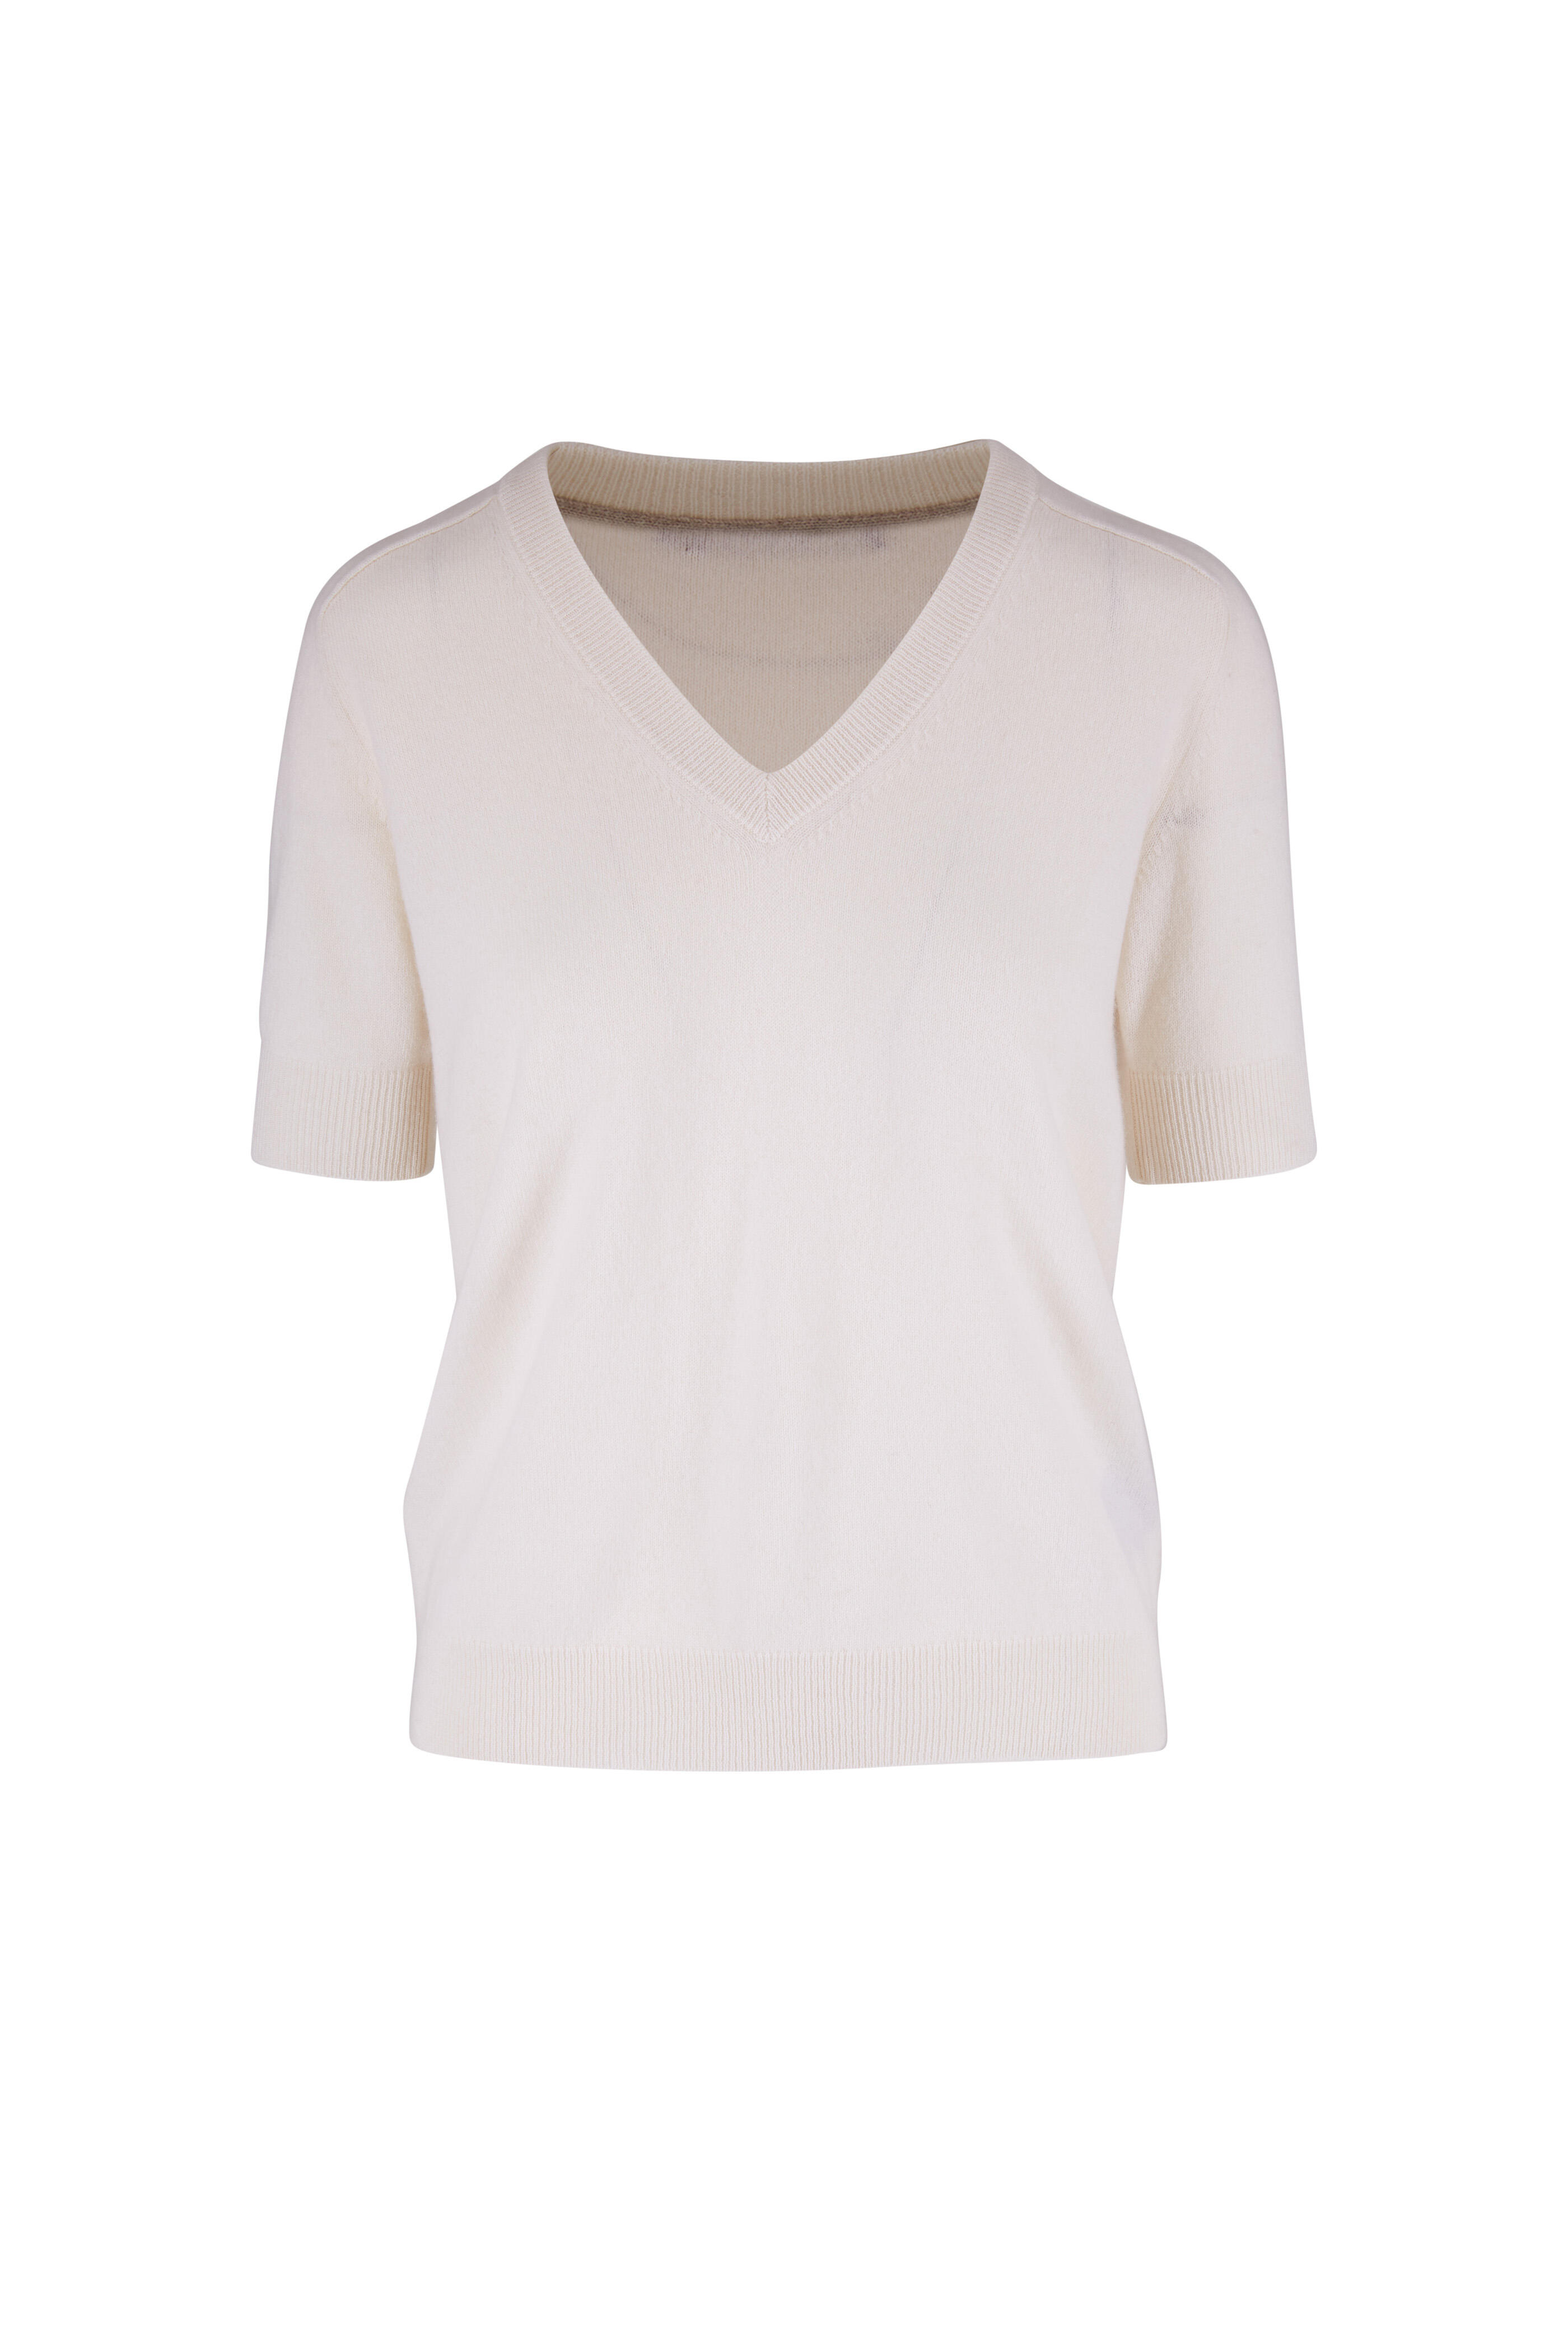 Lisa Yang - Leotine Cream Cashmere Short Sleeve Sweater